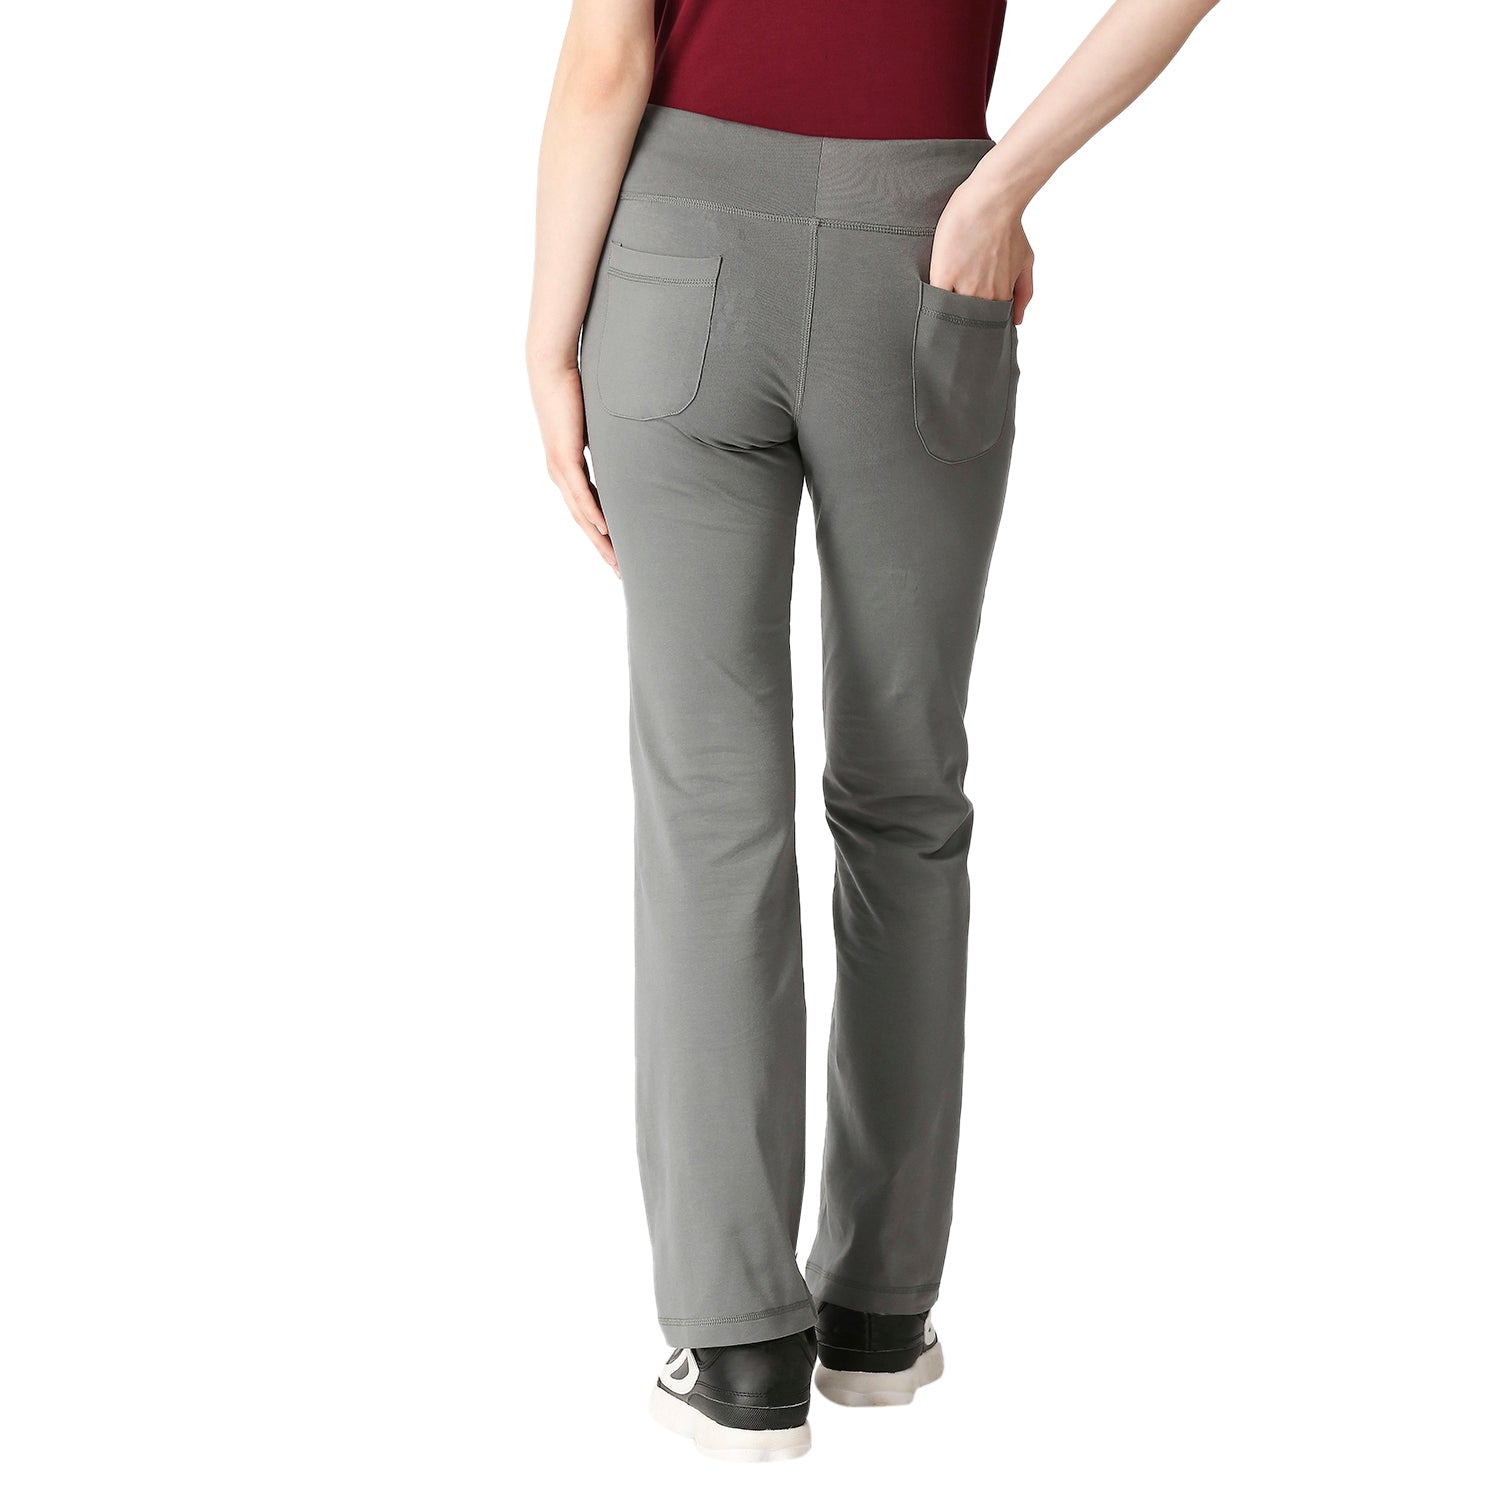 Smarty Pants women's cotton lycra ankle length grey formal trouser